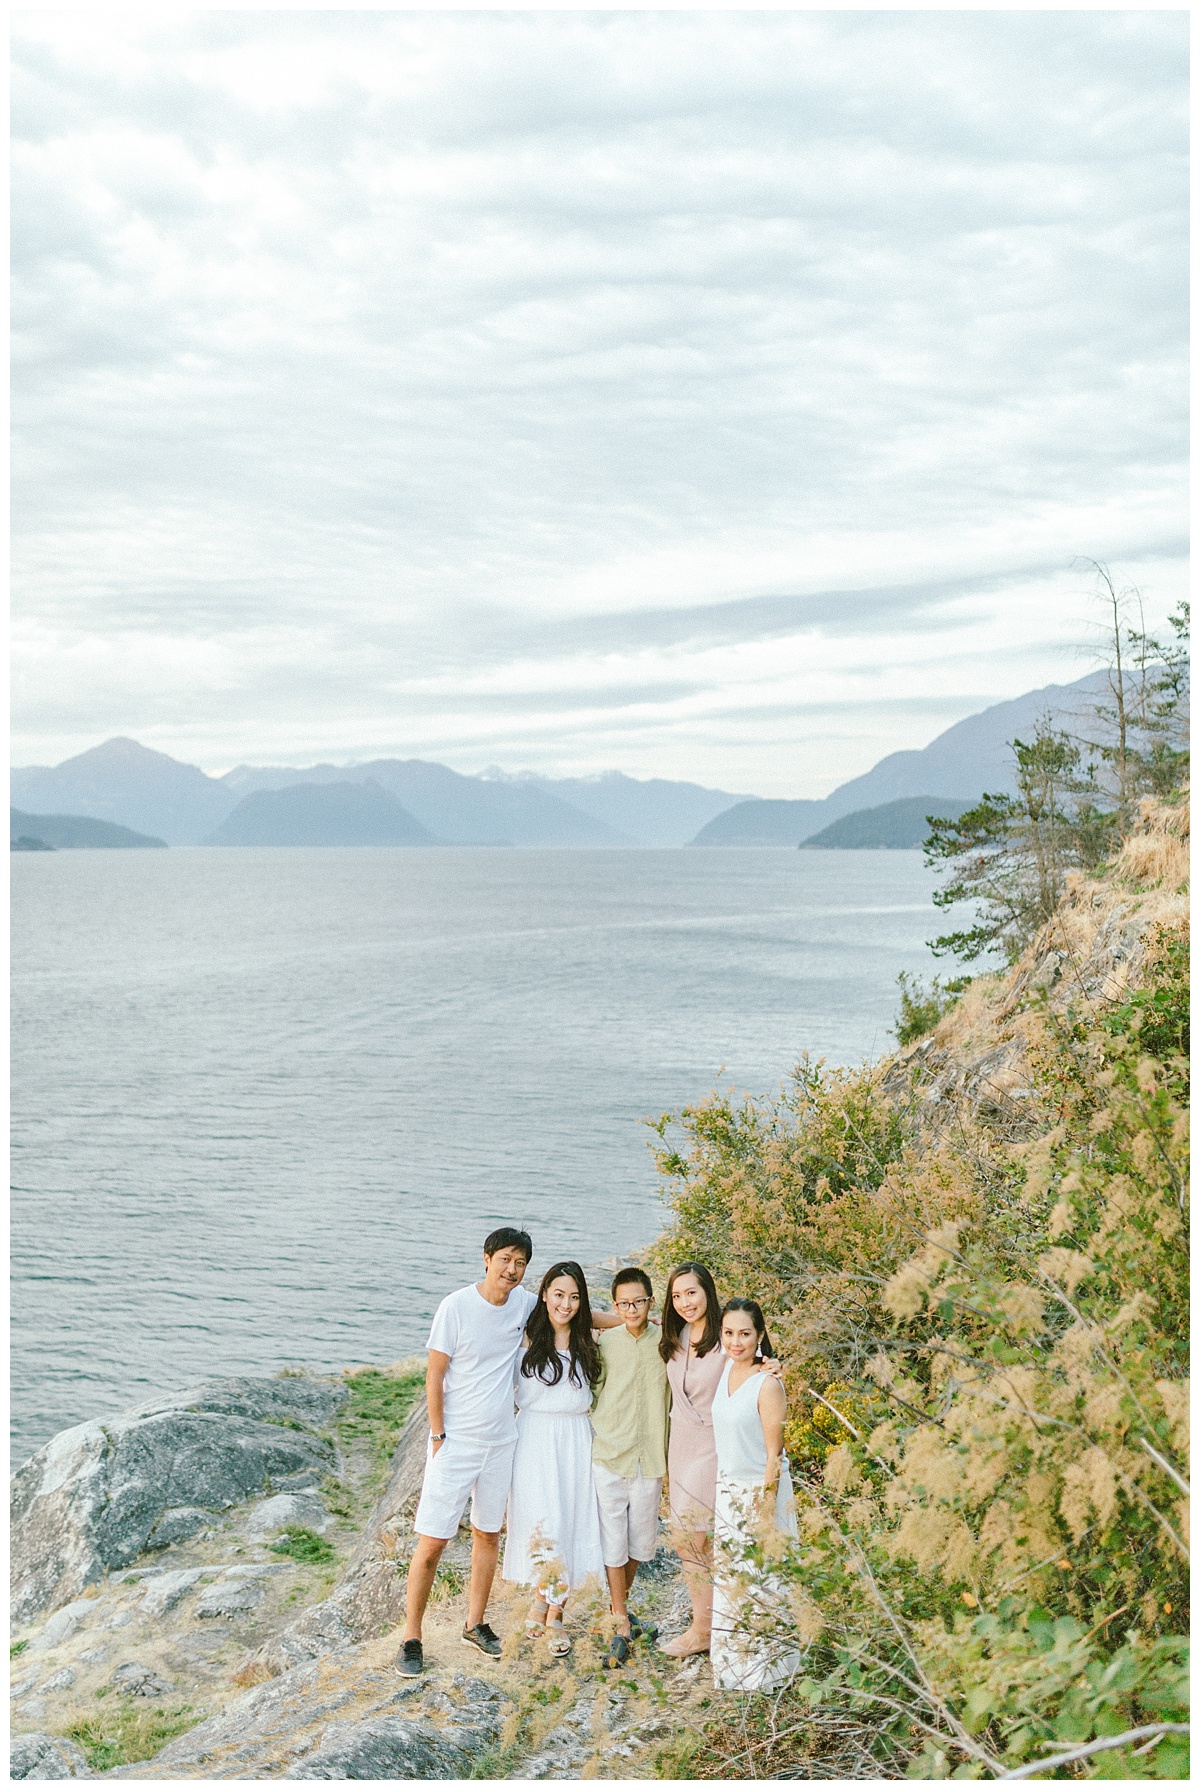 Mattie C. Hong Kong Vancouver Fine Art Family Photographer 51.jpg